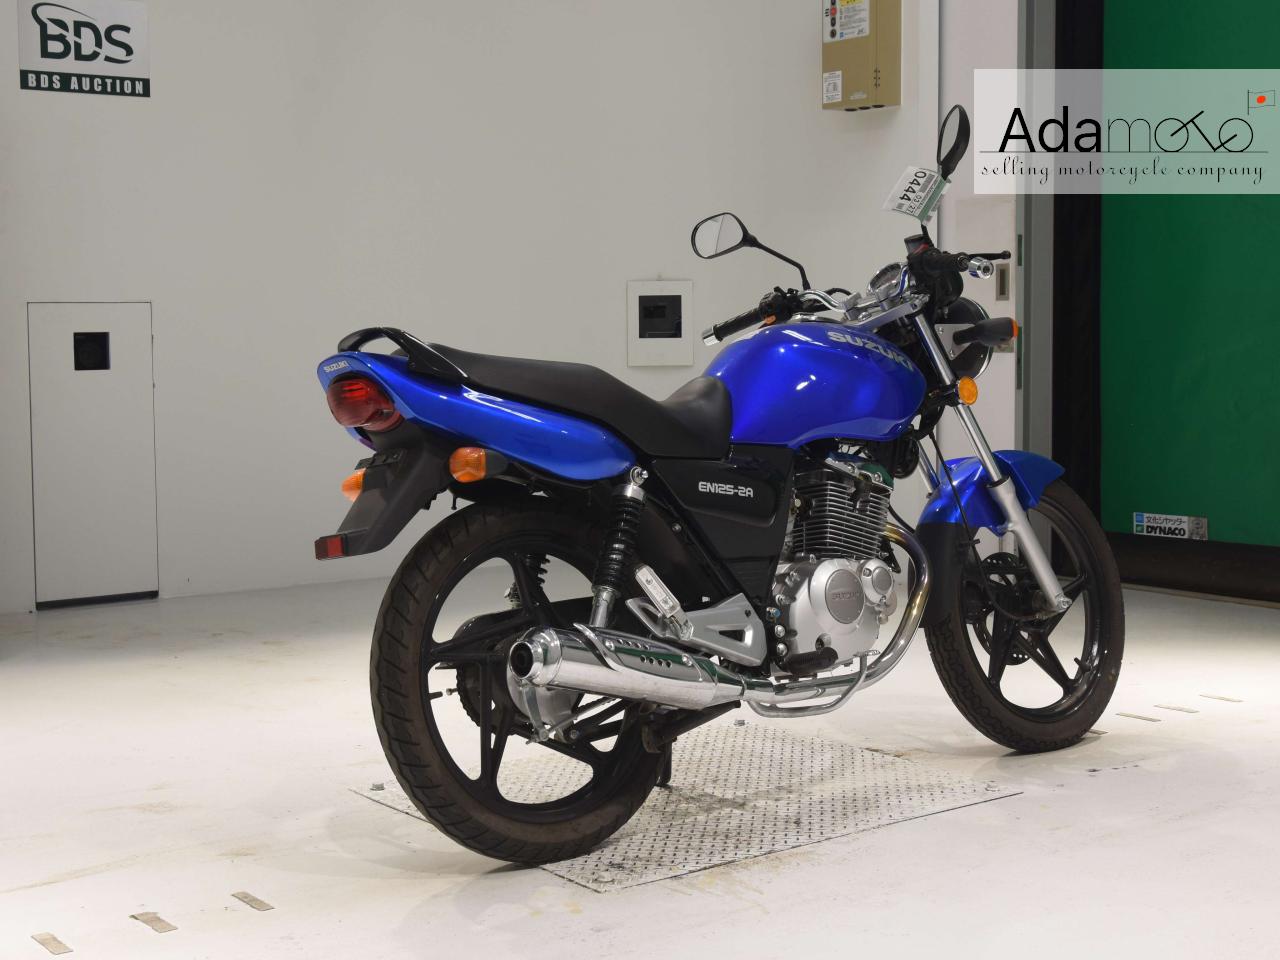 Suzuki EN125-2A - Adamoto - Motorcycles from Japan